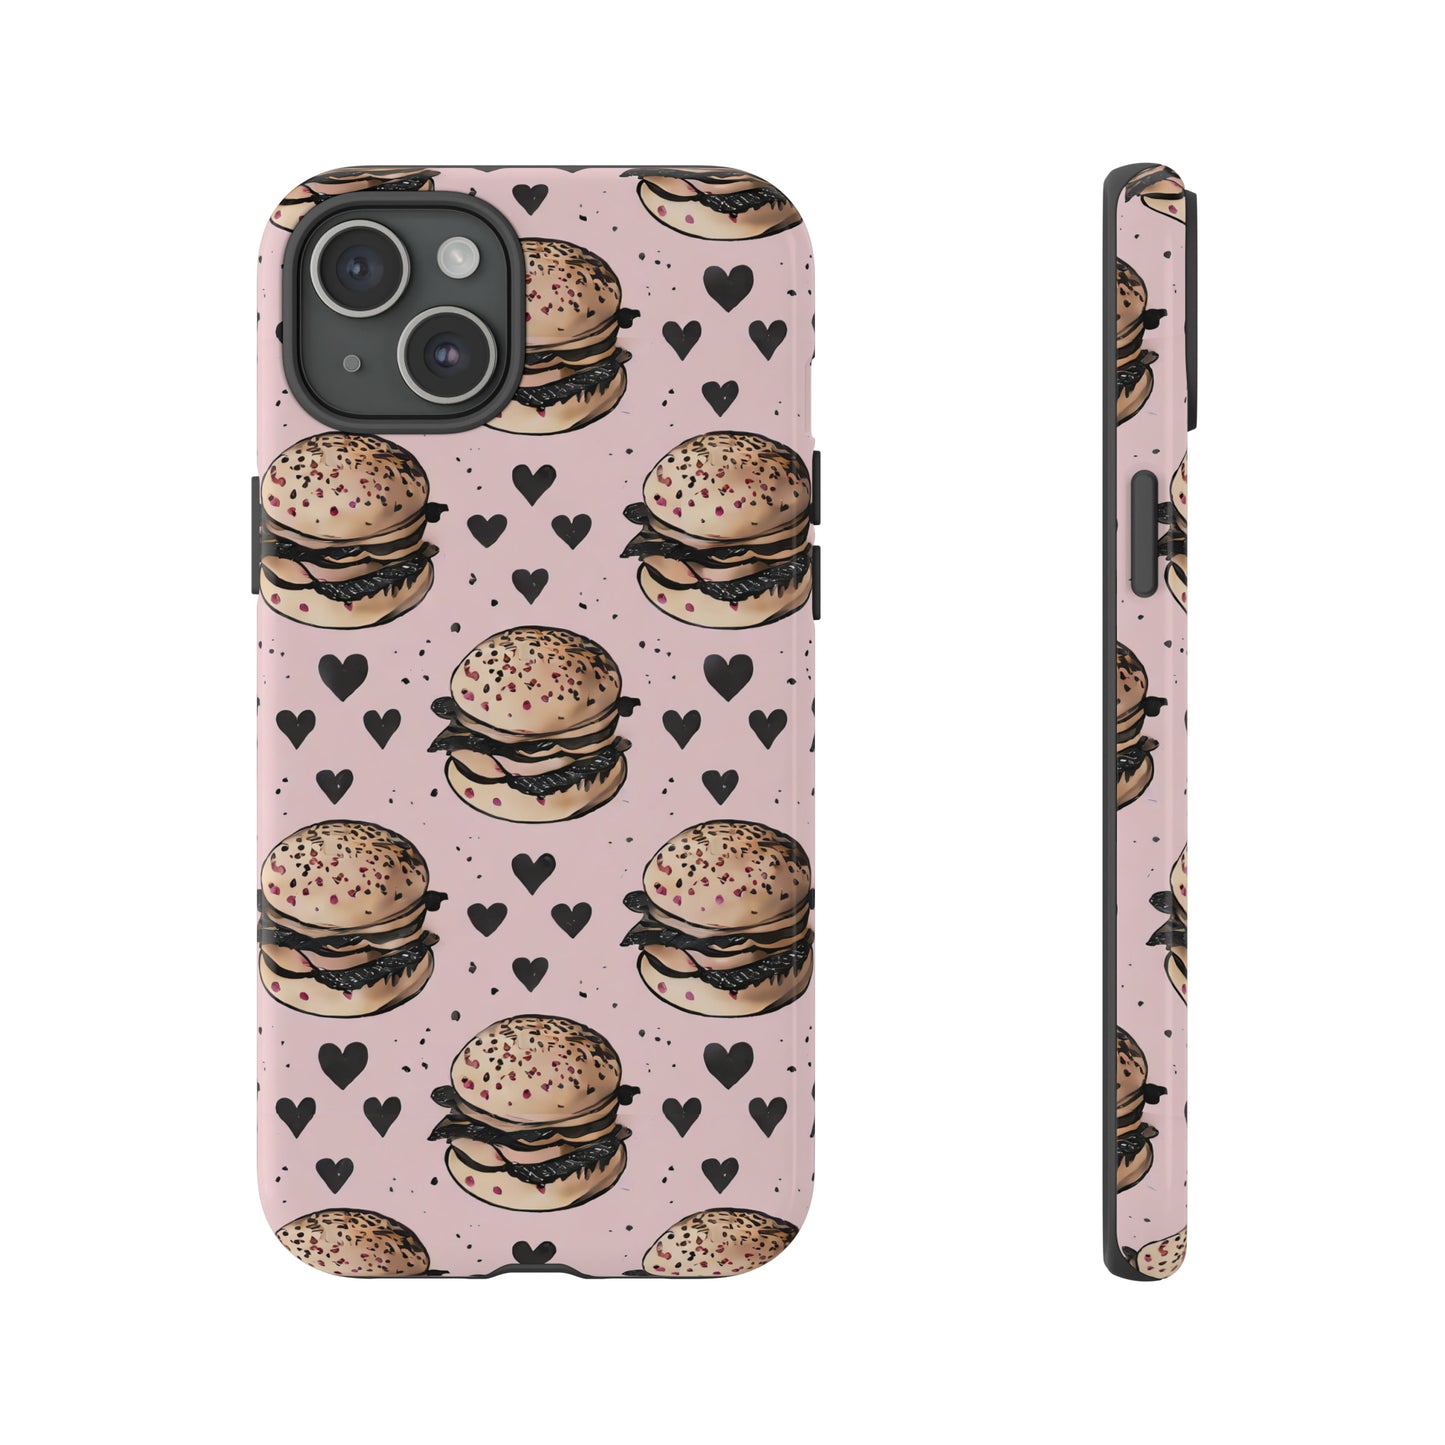 Hamburger phone Tough Cases